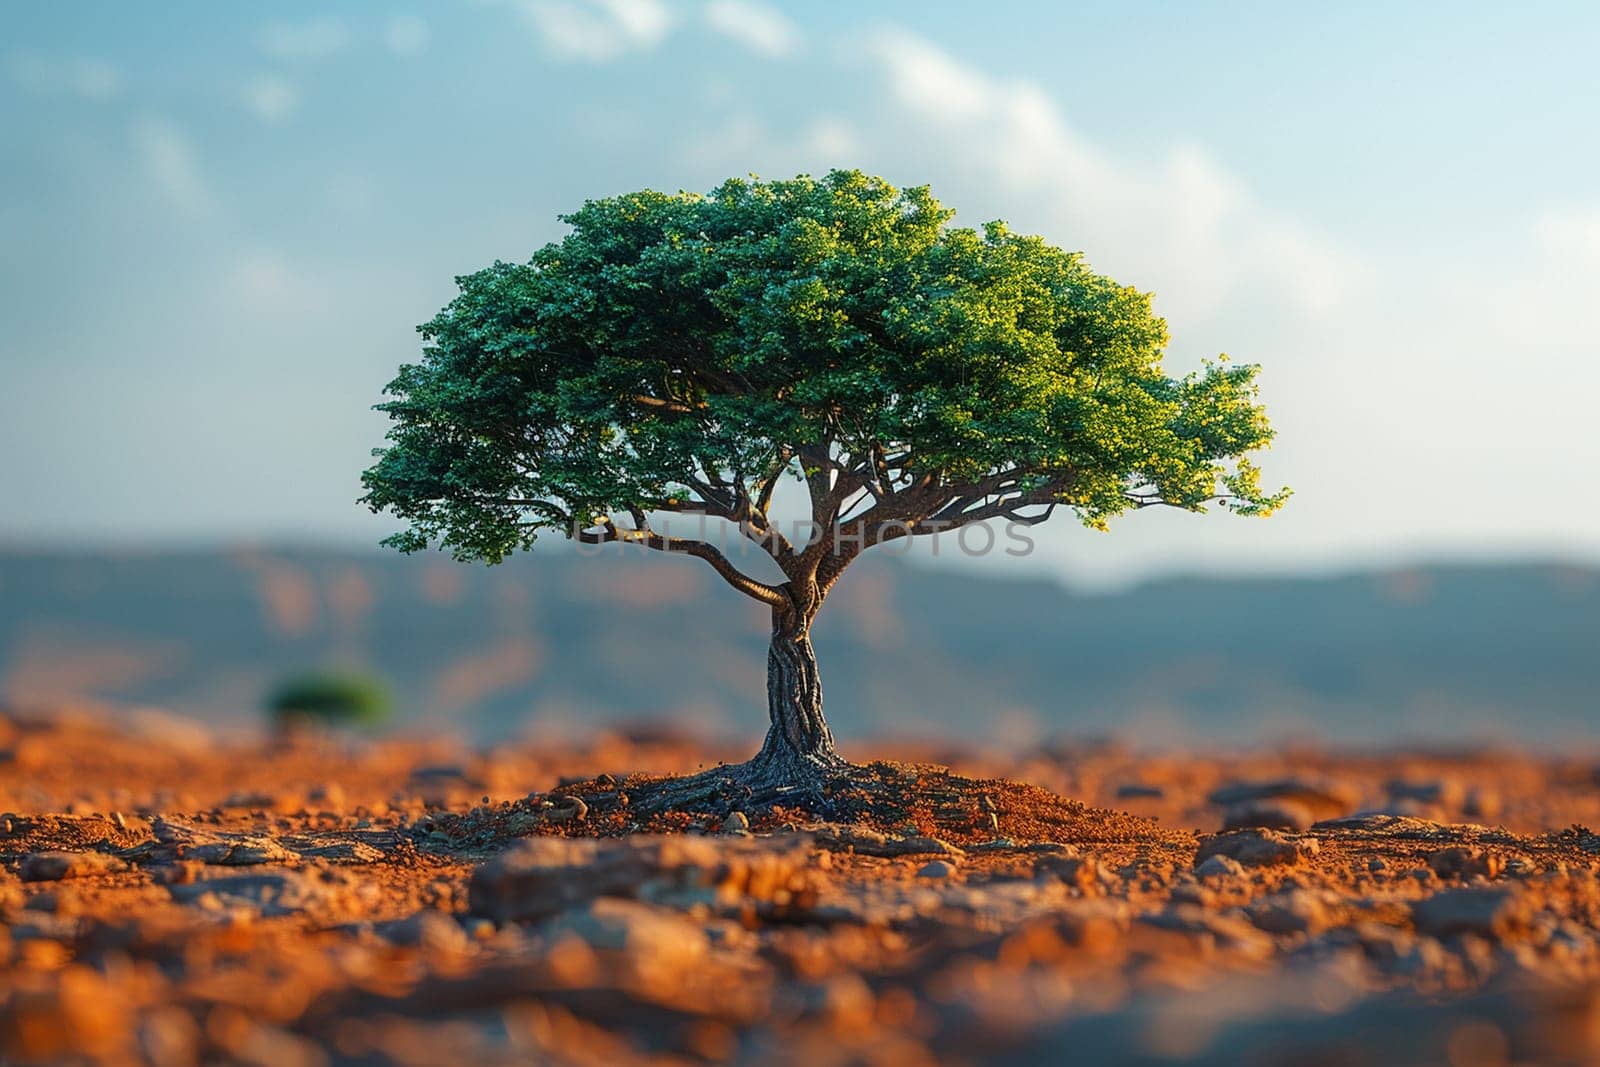 Vibrant green tree flourishing in barren desert environment, representing reforestation, survival, and nature's resilience